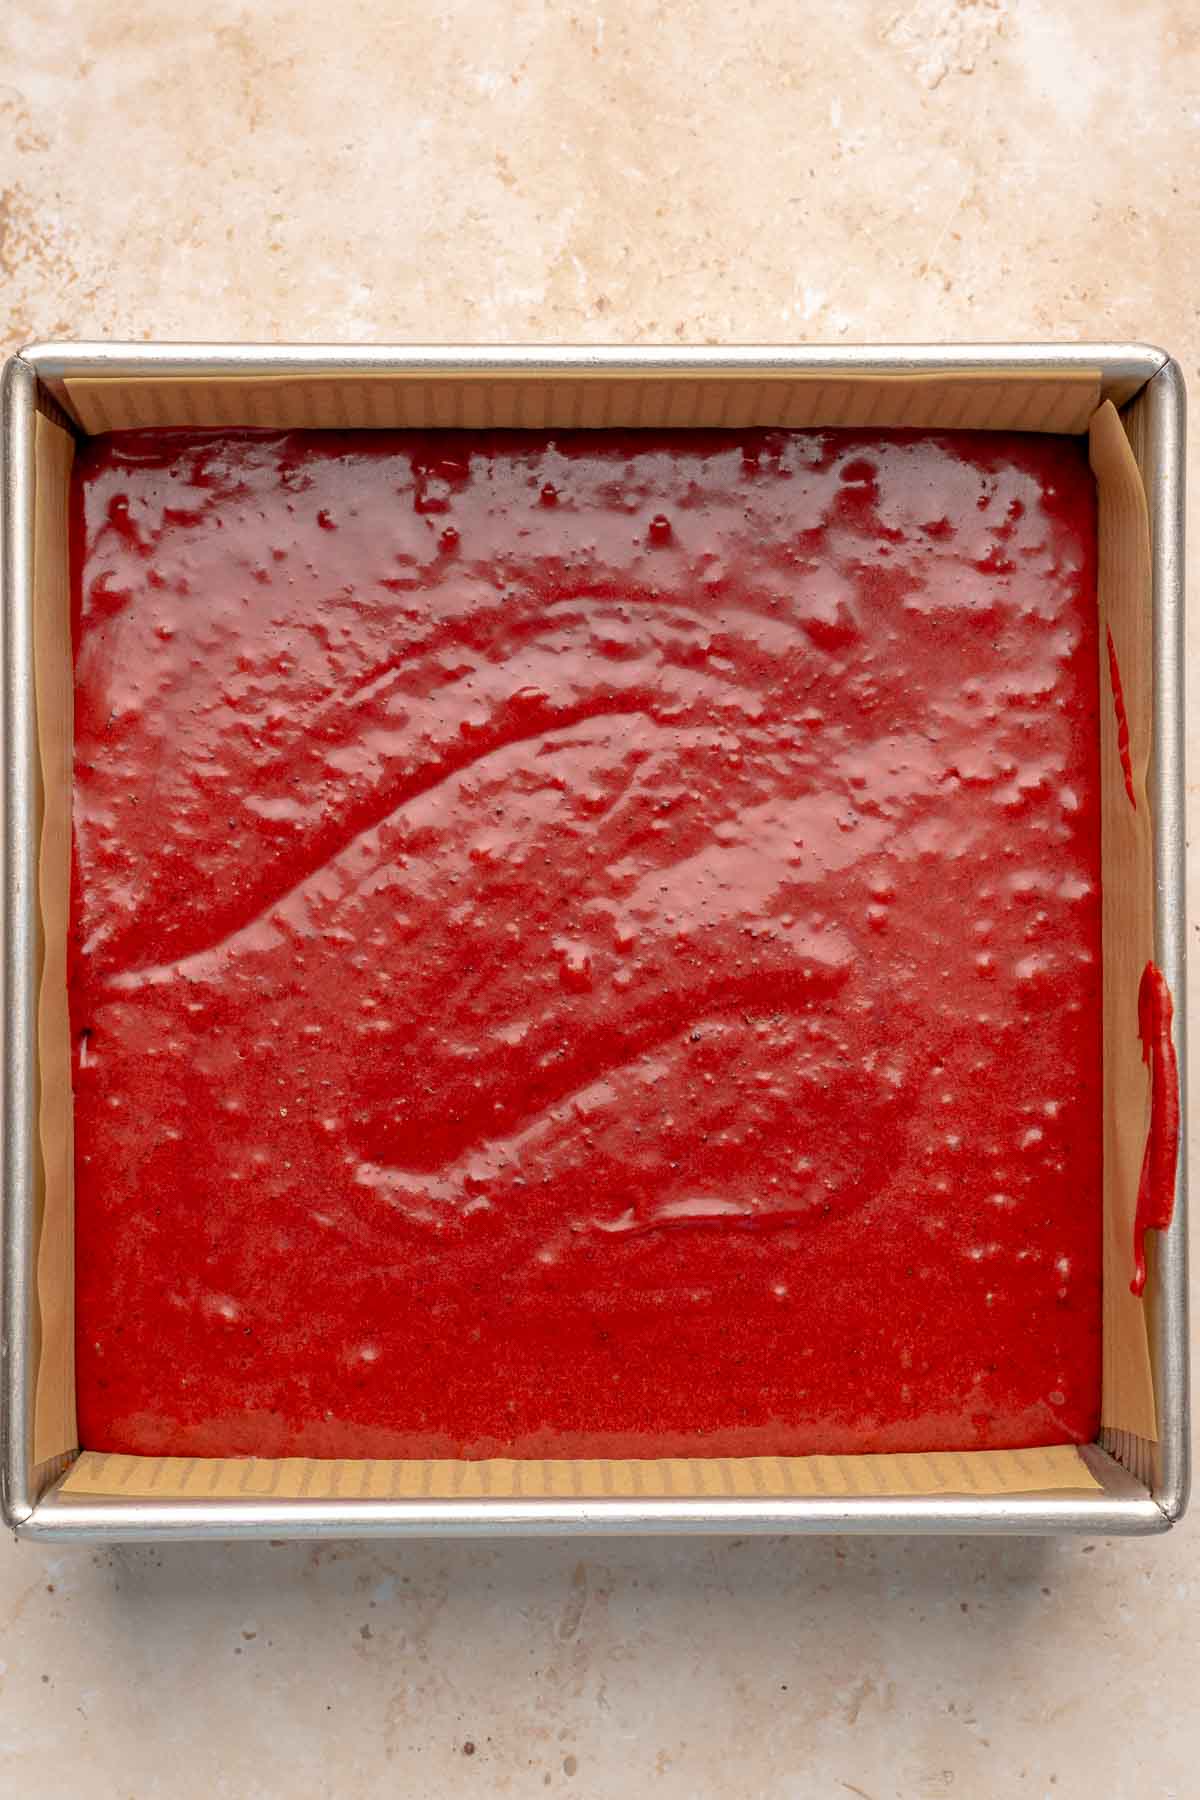 Red velvet brownie batter in a prepared square pan.